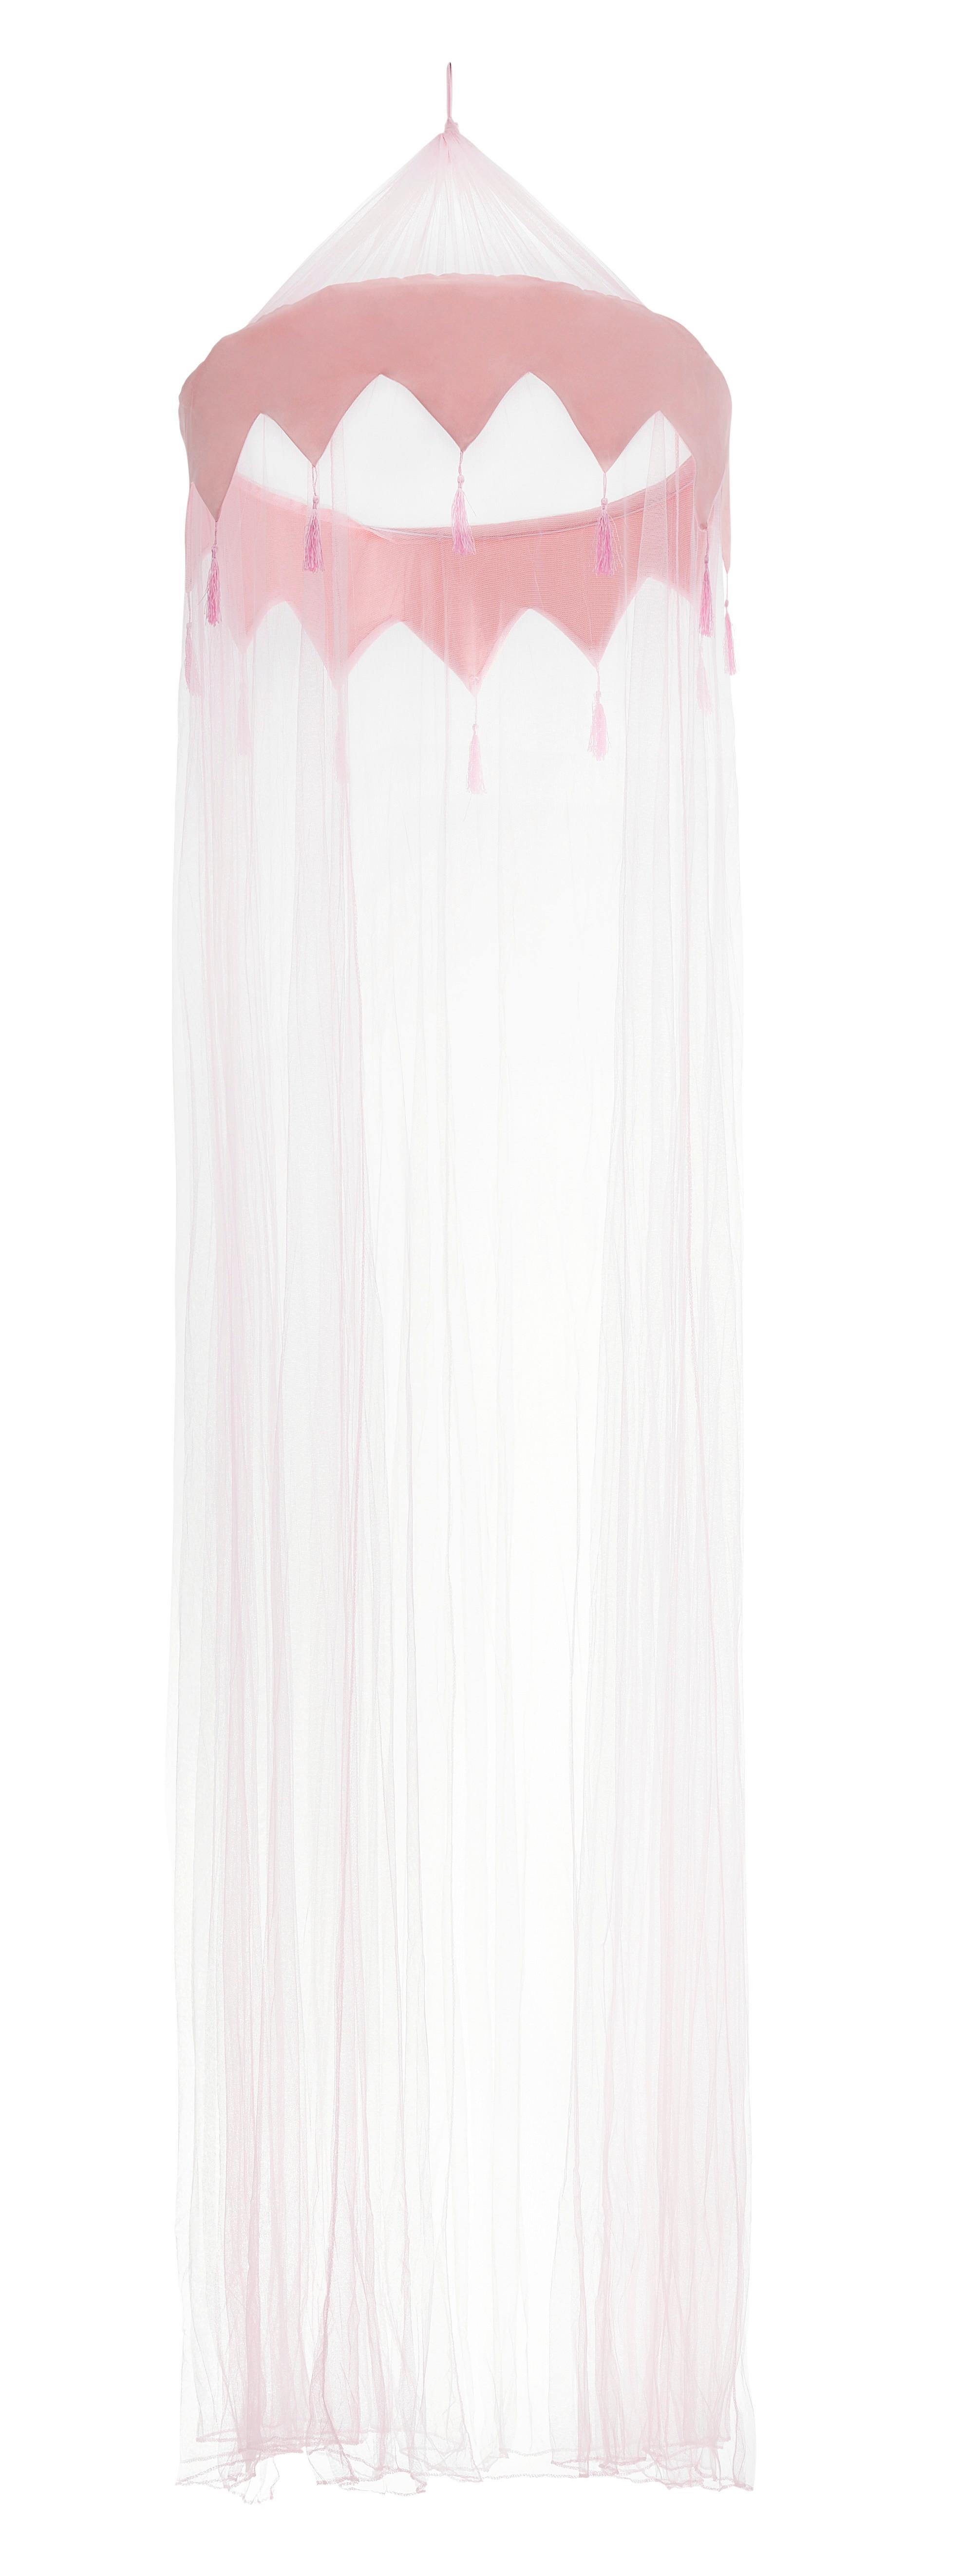 Baldachýn Kathi - ružová, Romantický / Vidiecky, textil (60/250/1000cm) - Modern Living